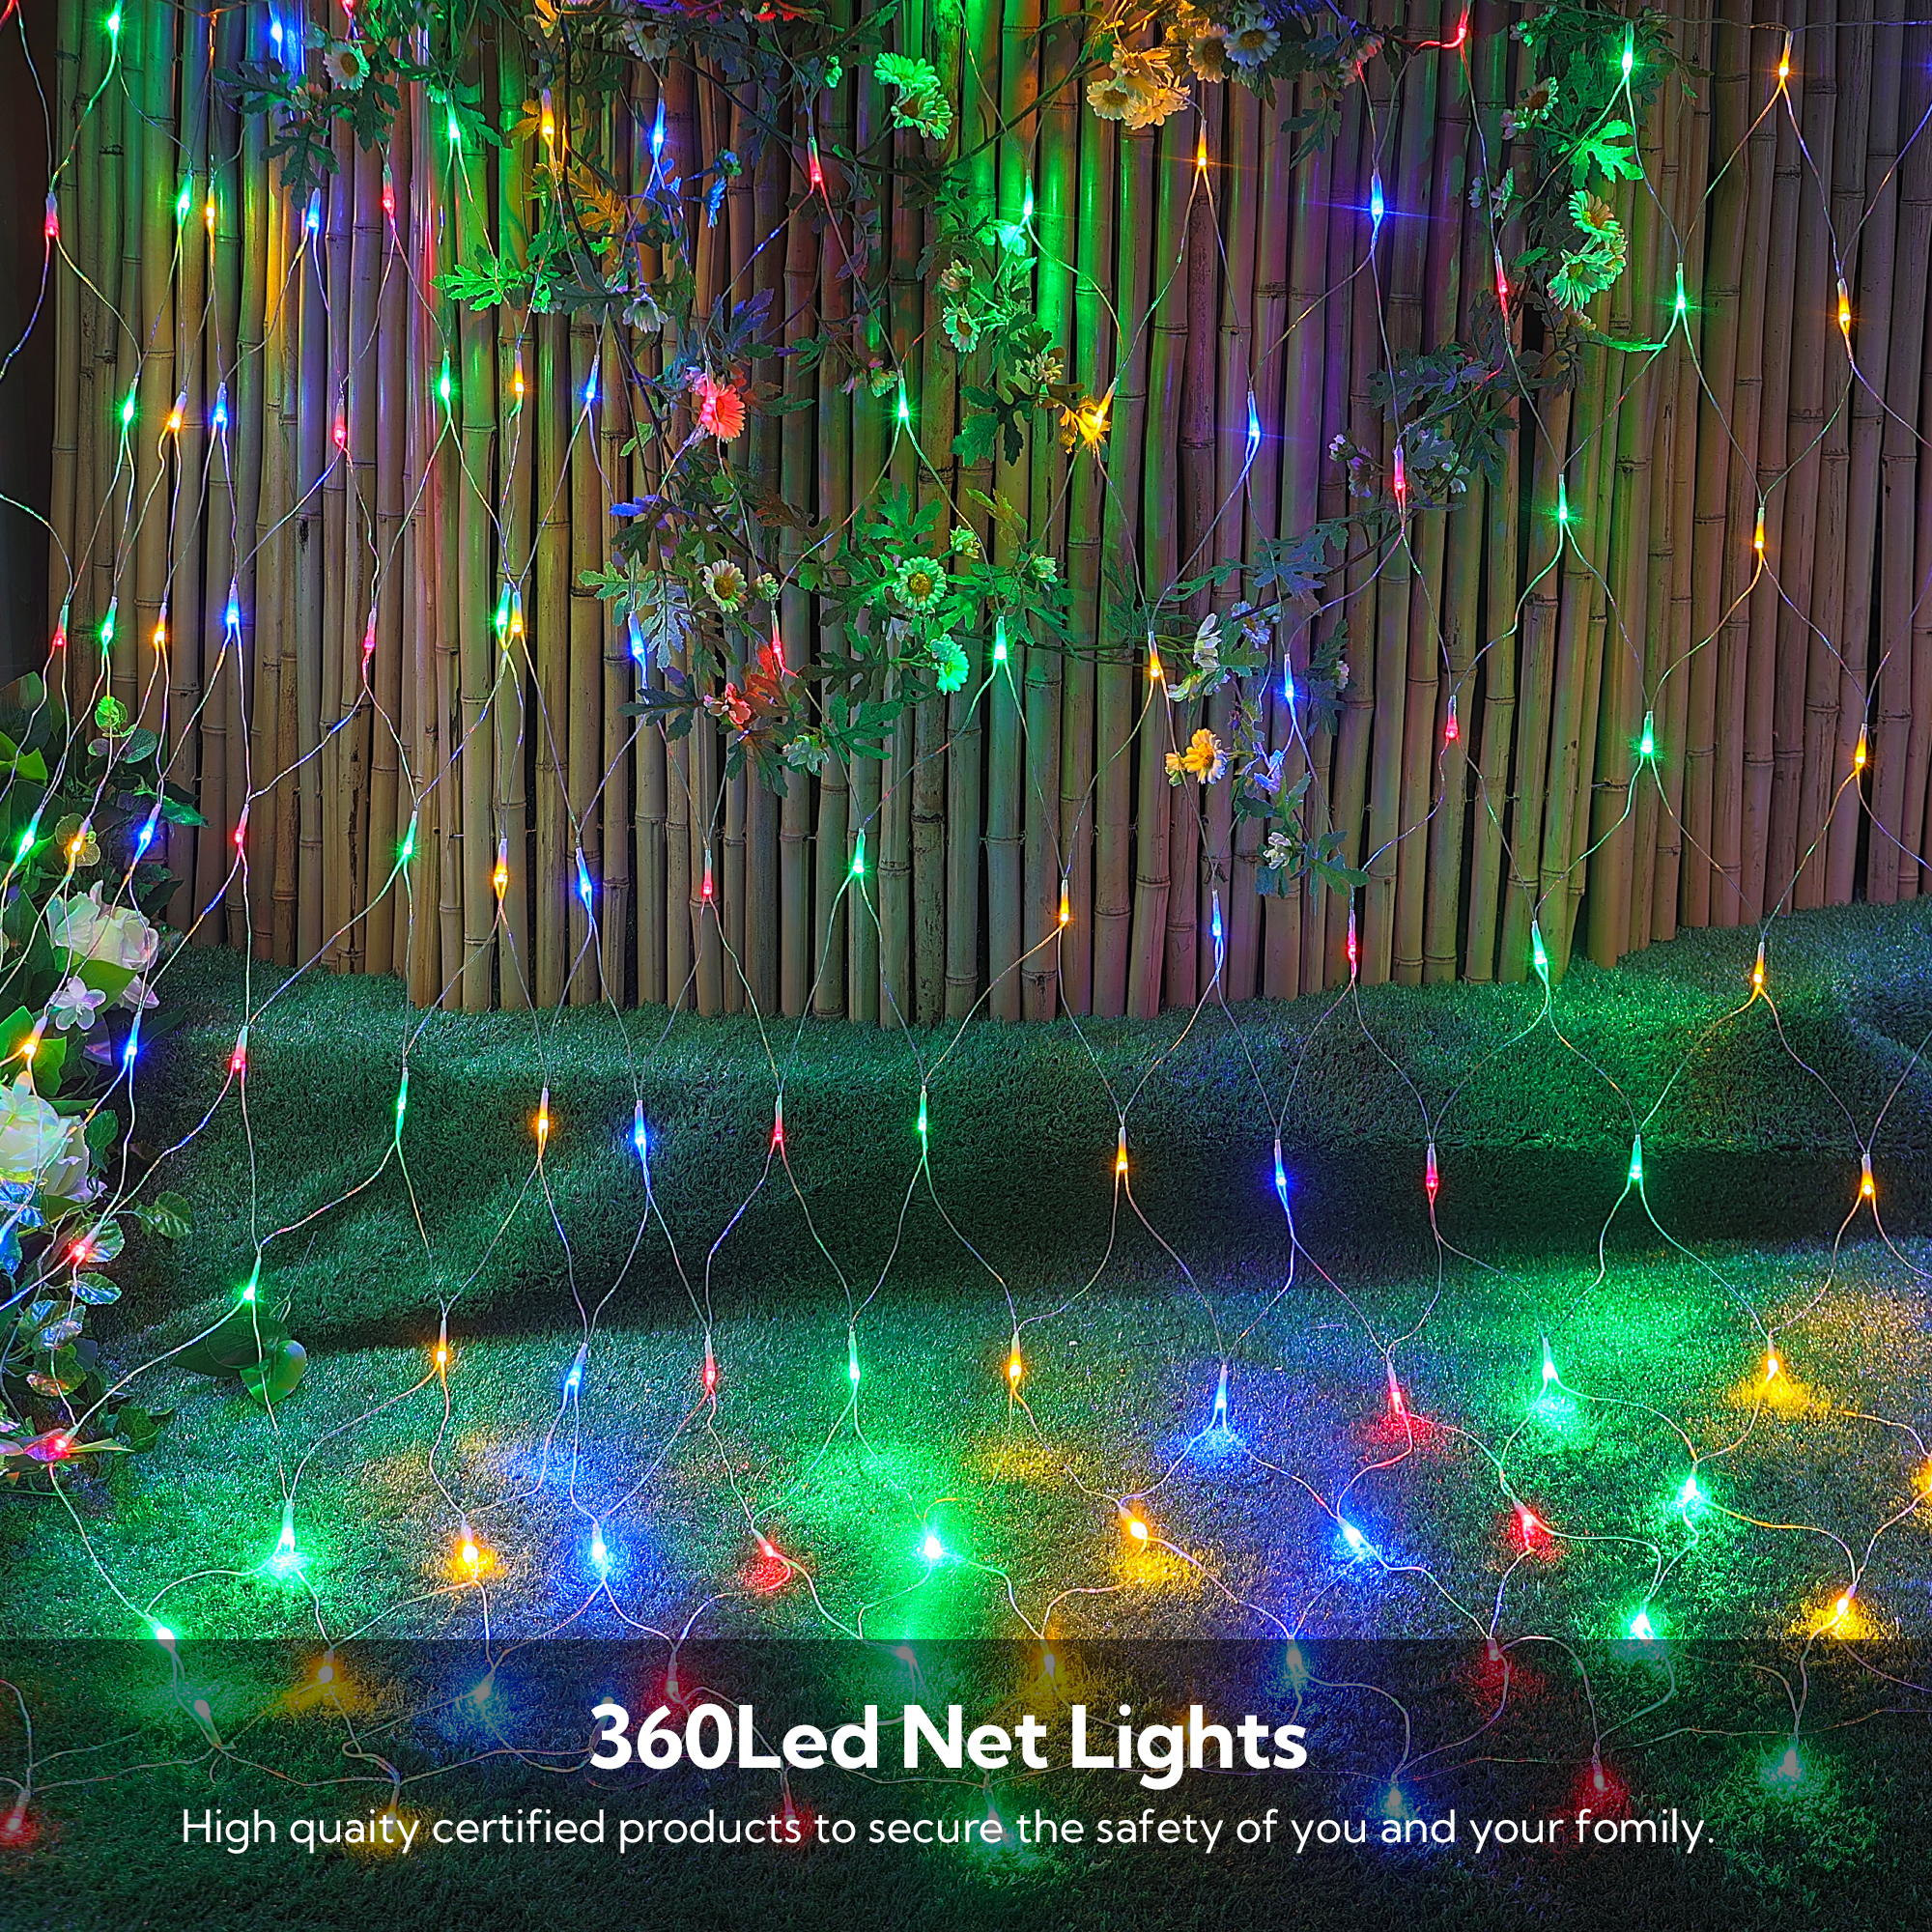 360 LED Multicolor Net String Lights